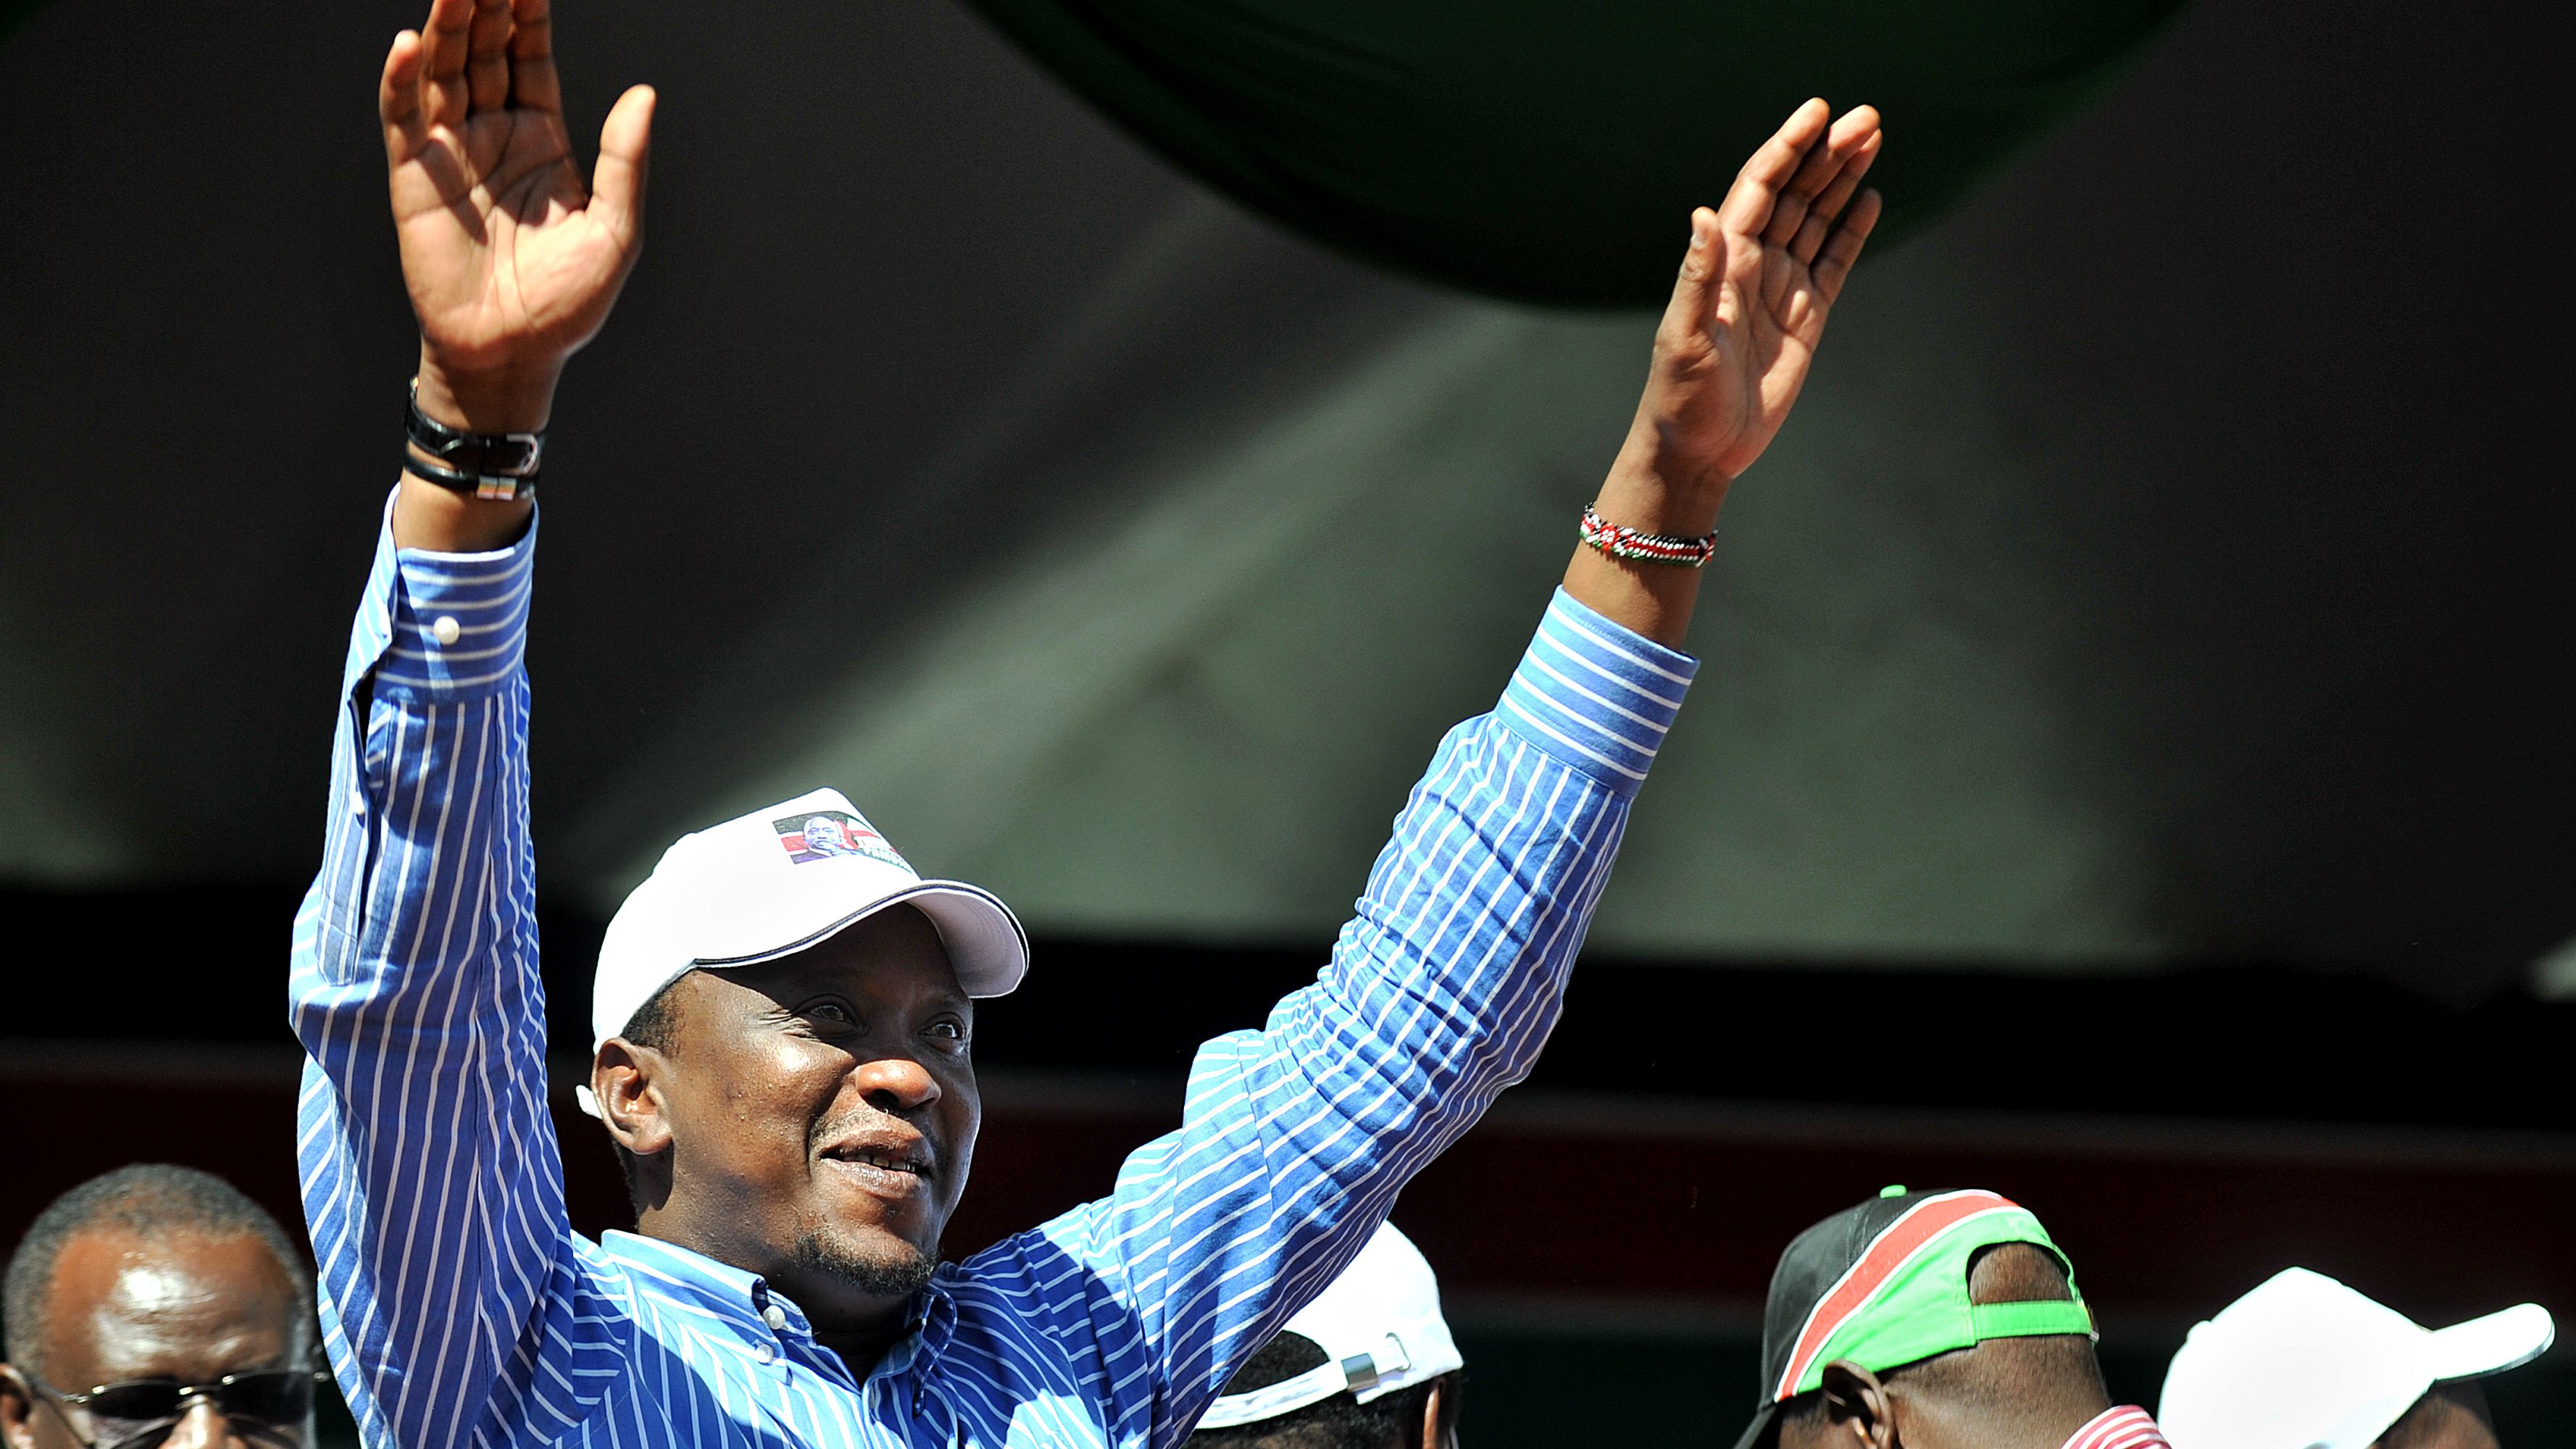 Kenya's Deputy Prime Minister, Uhuru Kenyatta, waves to supporters in Nairobi in April 2011.